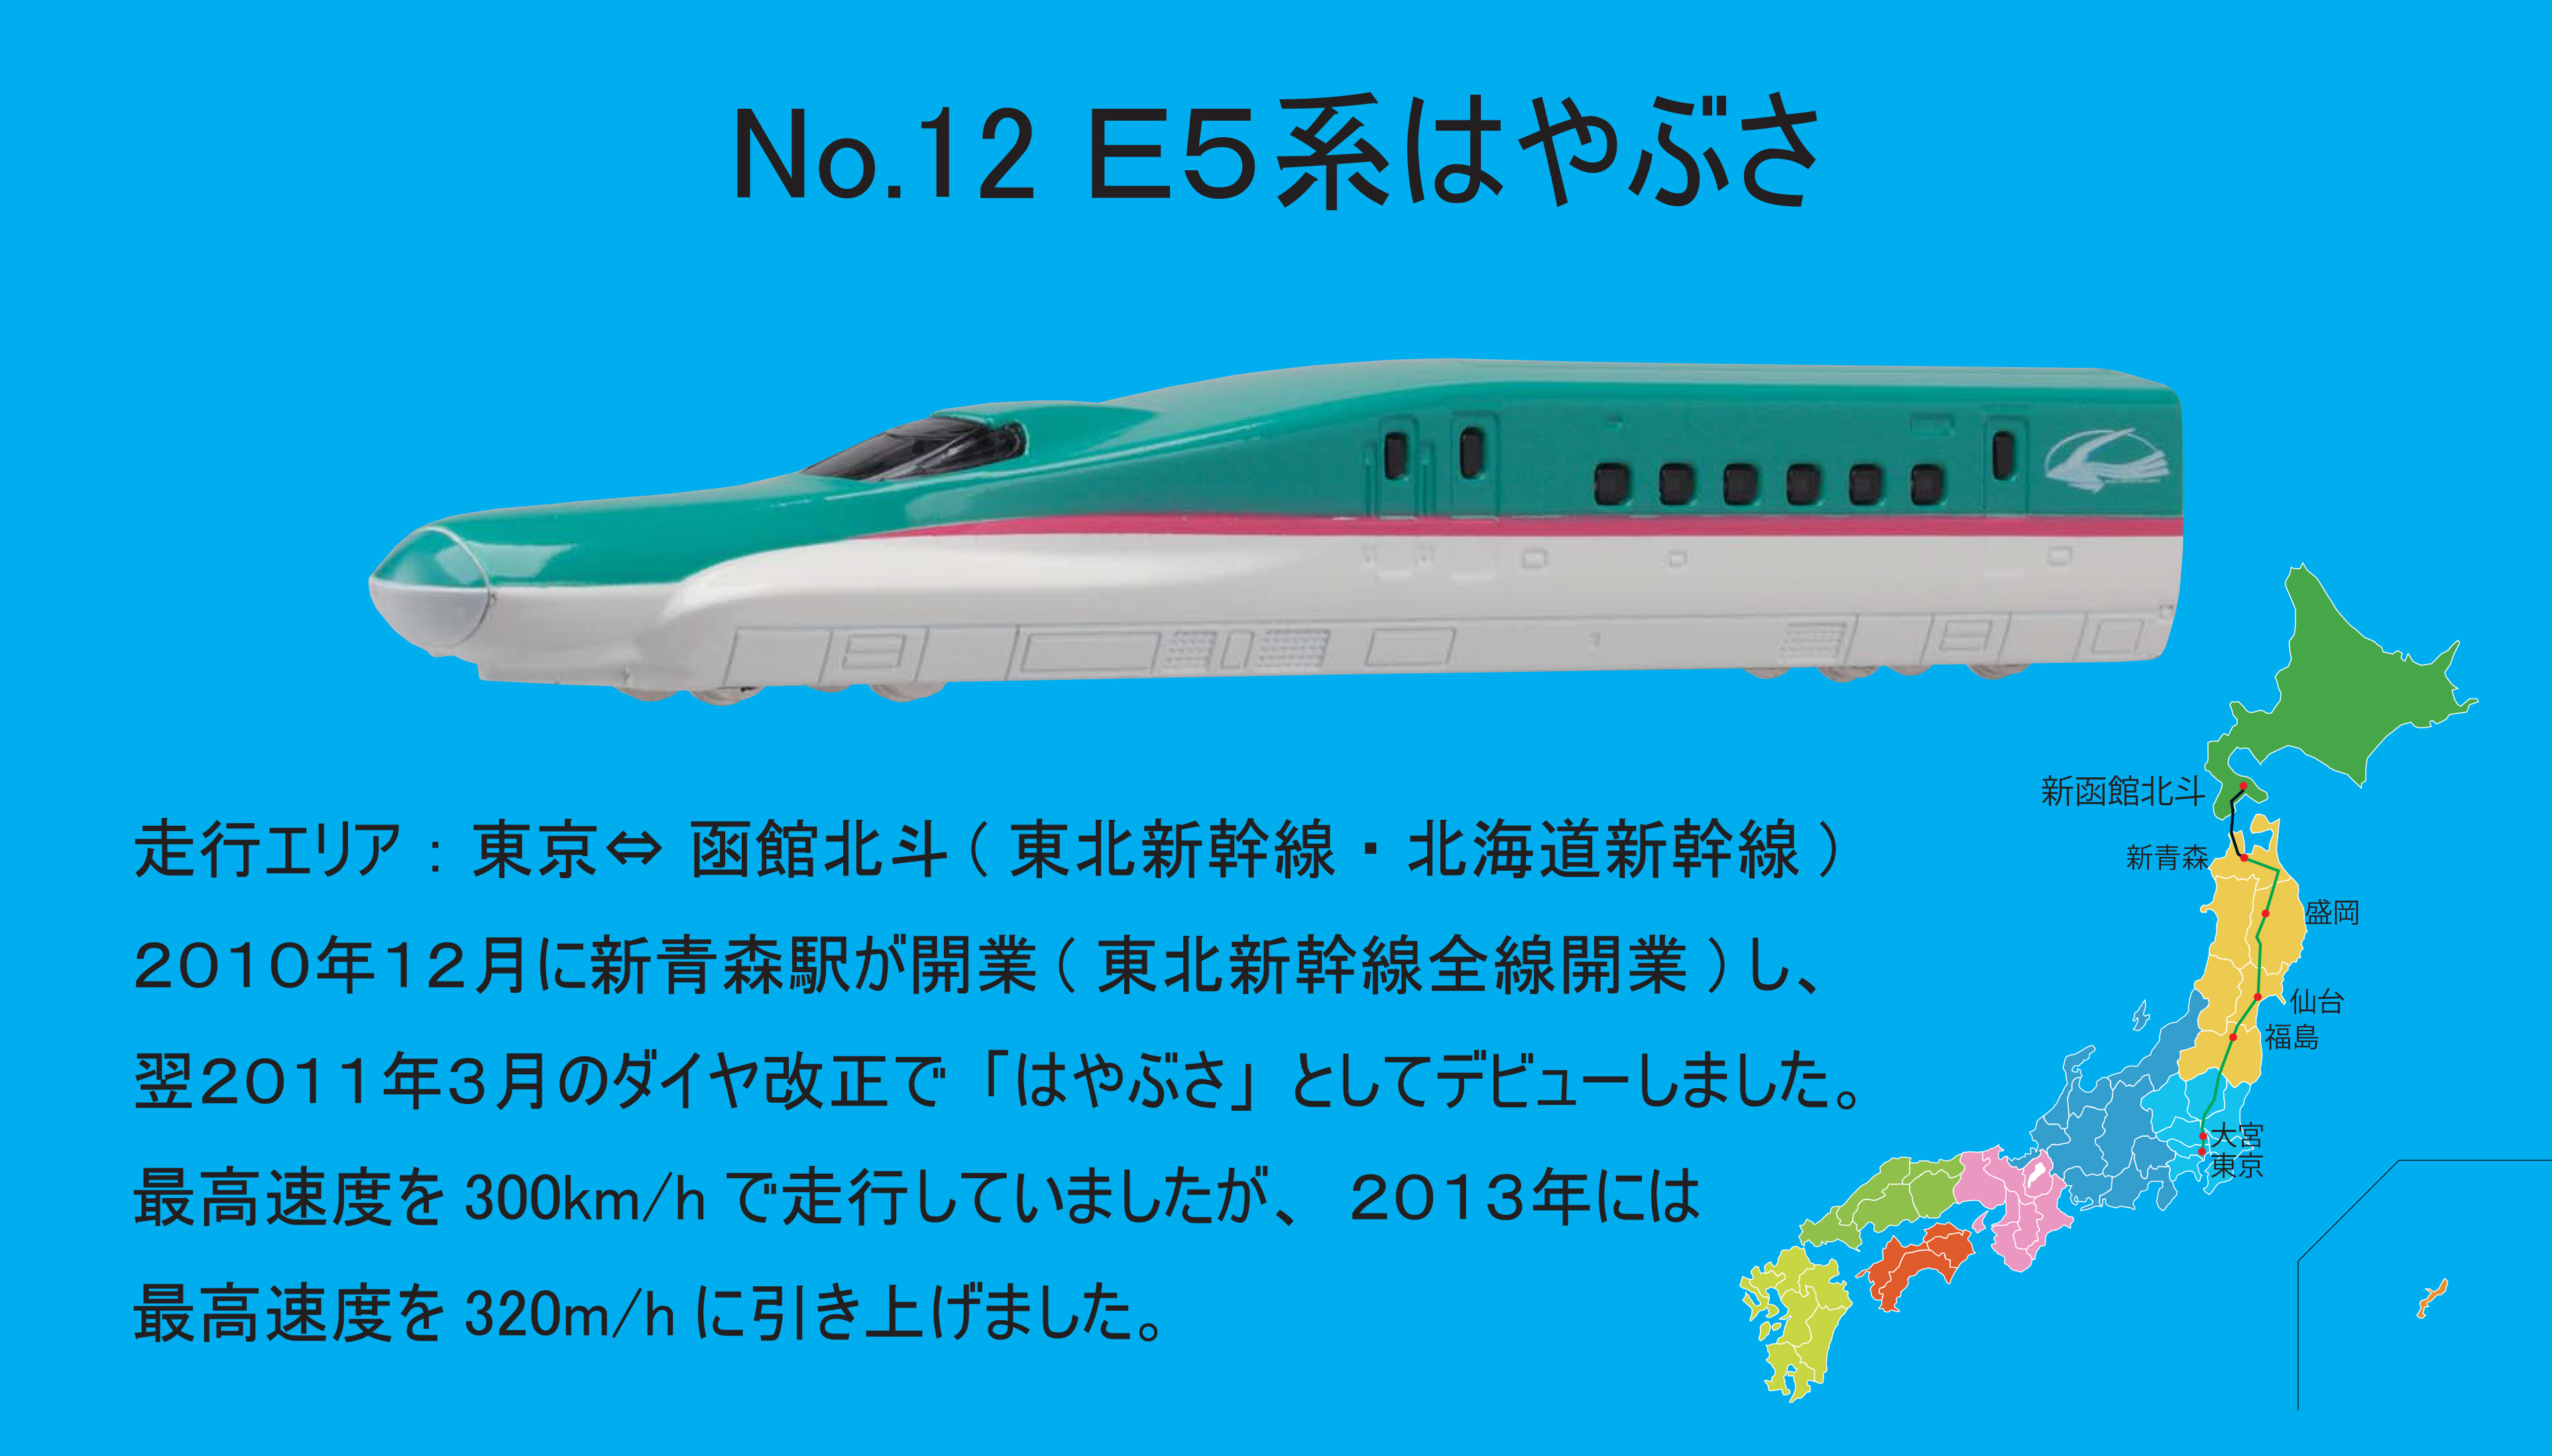 Nゲージダイキャストスケールモデル No.11 ~ No.20